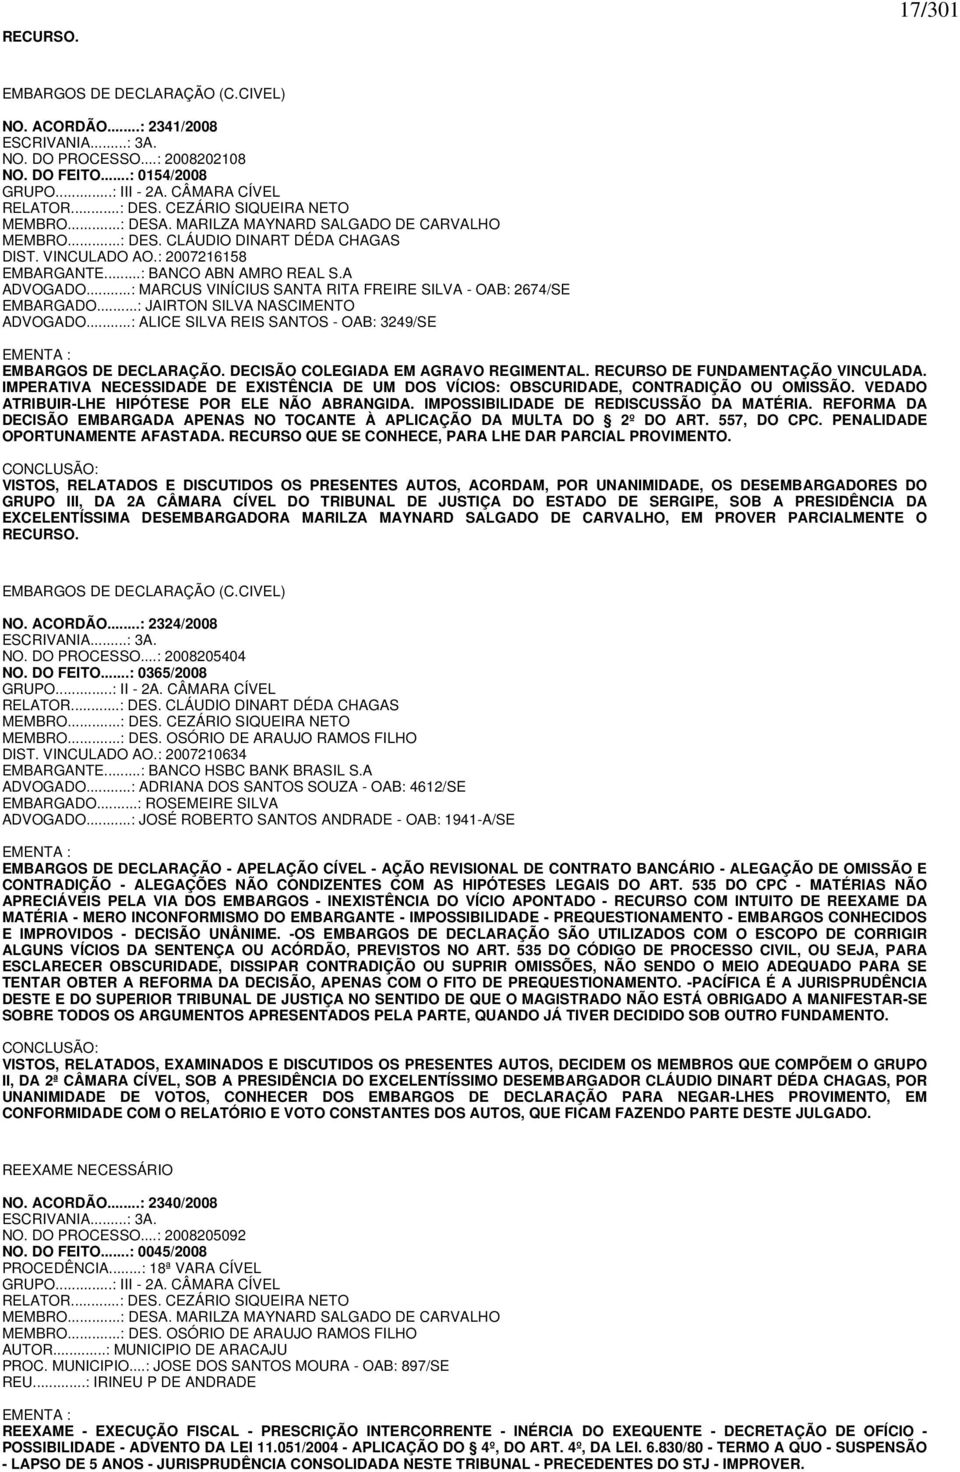 ..: MARCUS VINÍCIUS SANTA RITA FREIRE SILVA - OAB: 2674/SE EMBARGADO...: JAIRTON SILVA NASCIMENTO ADVOGADO...: ALICE SILVA REIS SANTOS - OAB: 3249/SE EMENTA : EMBARGOS DE DECLARAÇÃO.